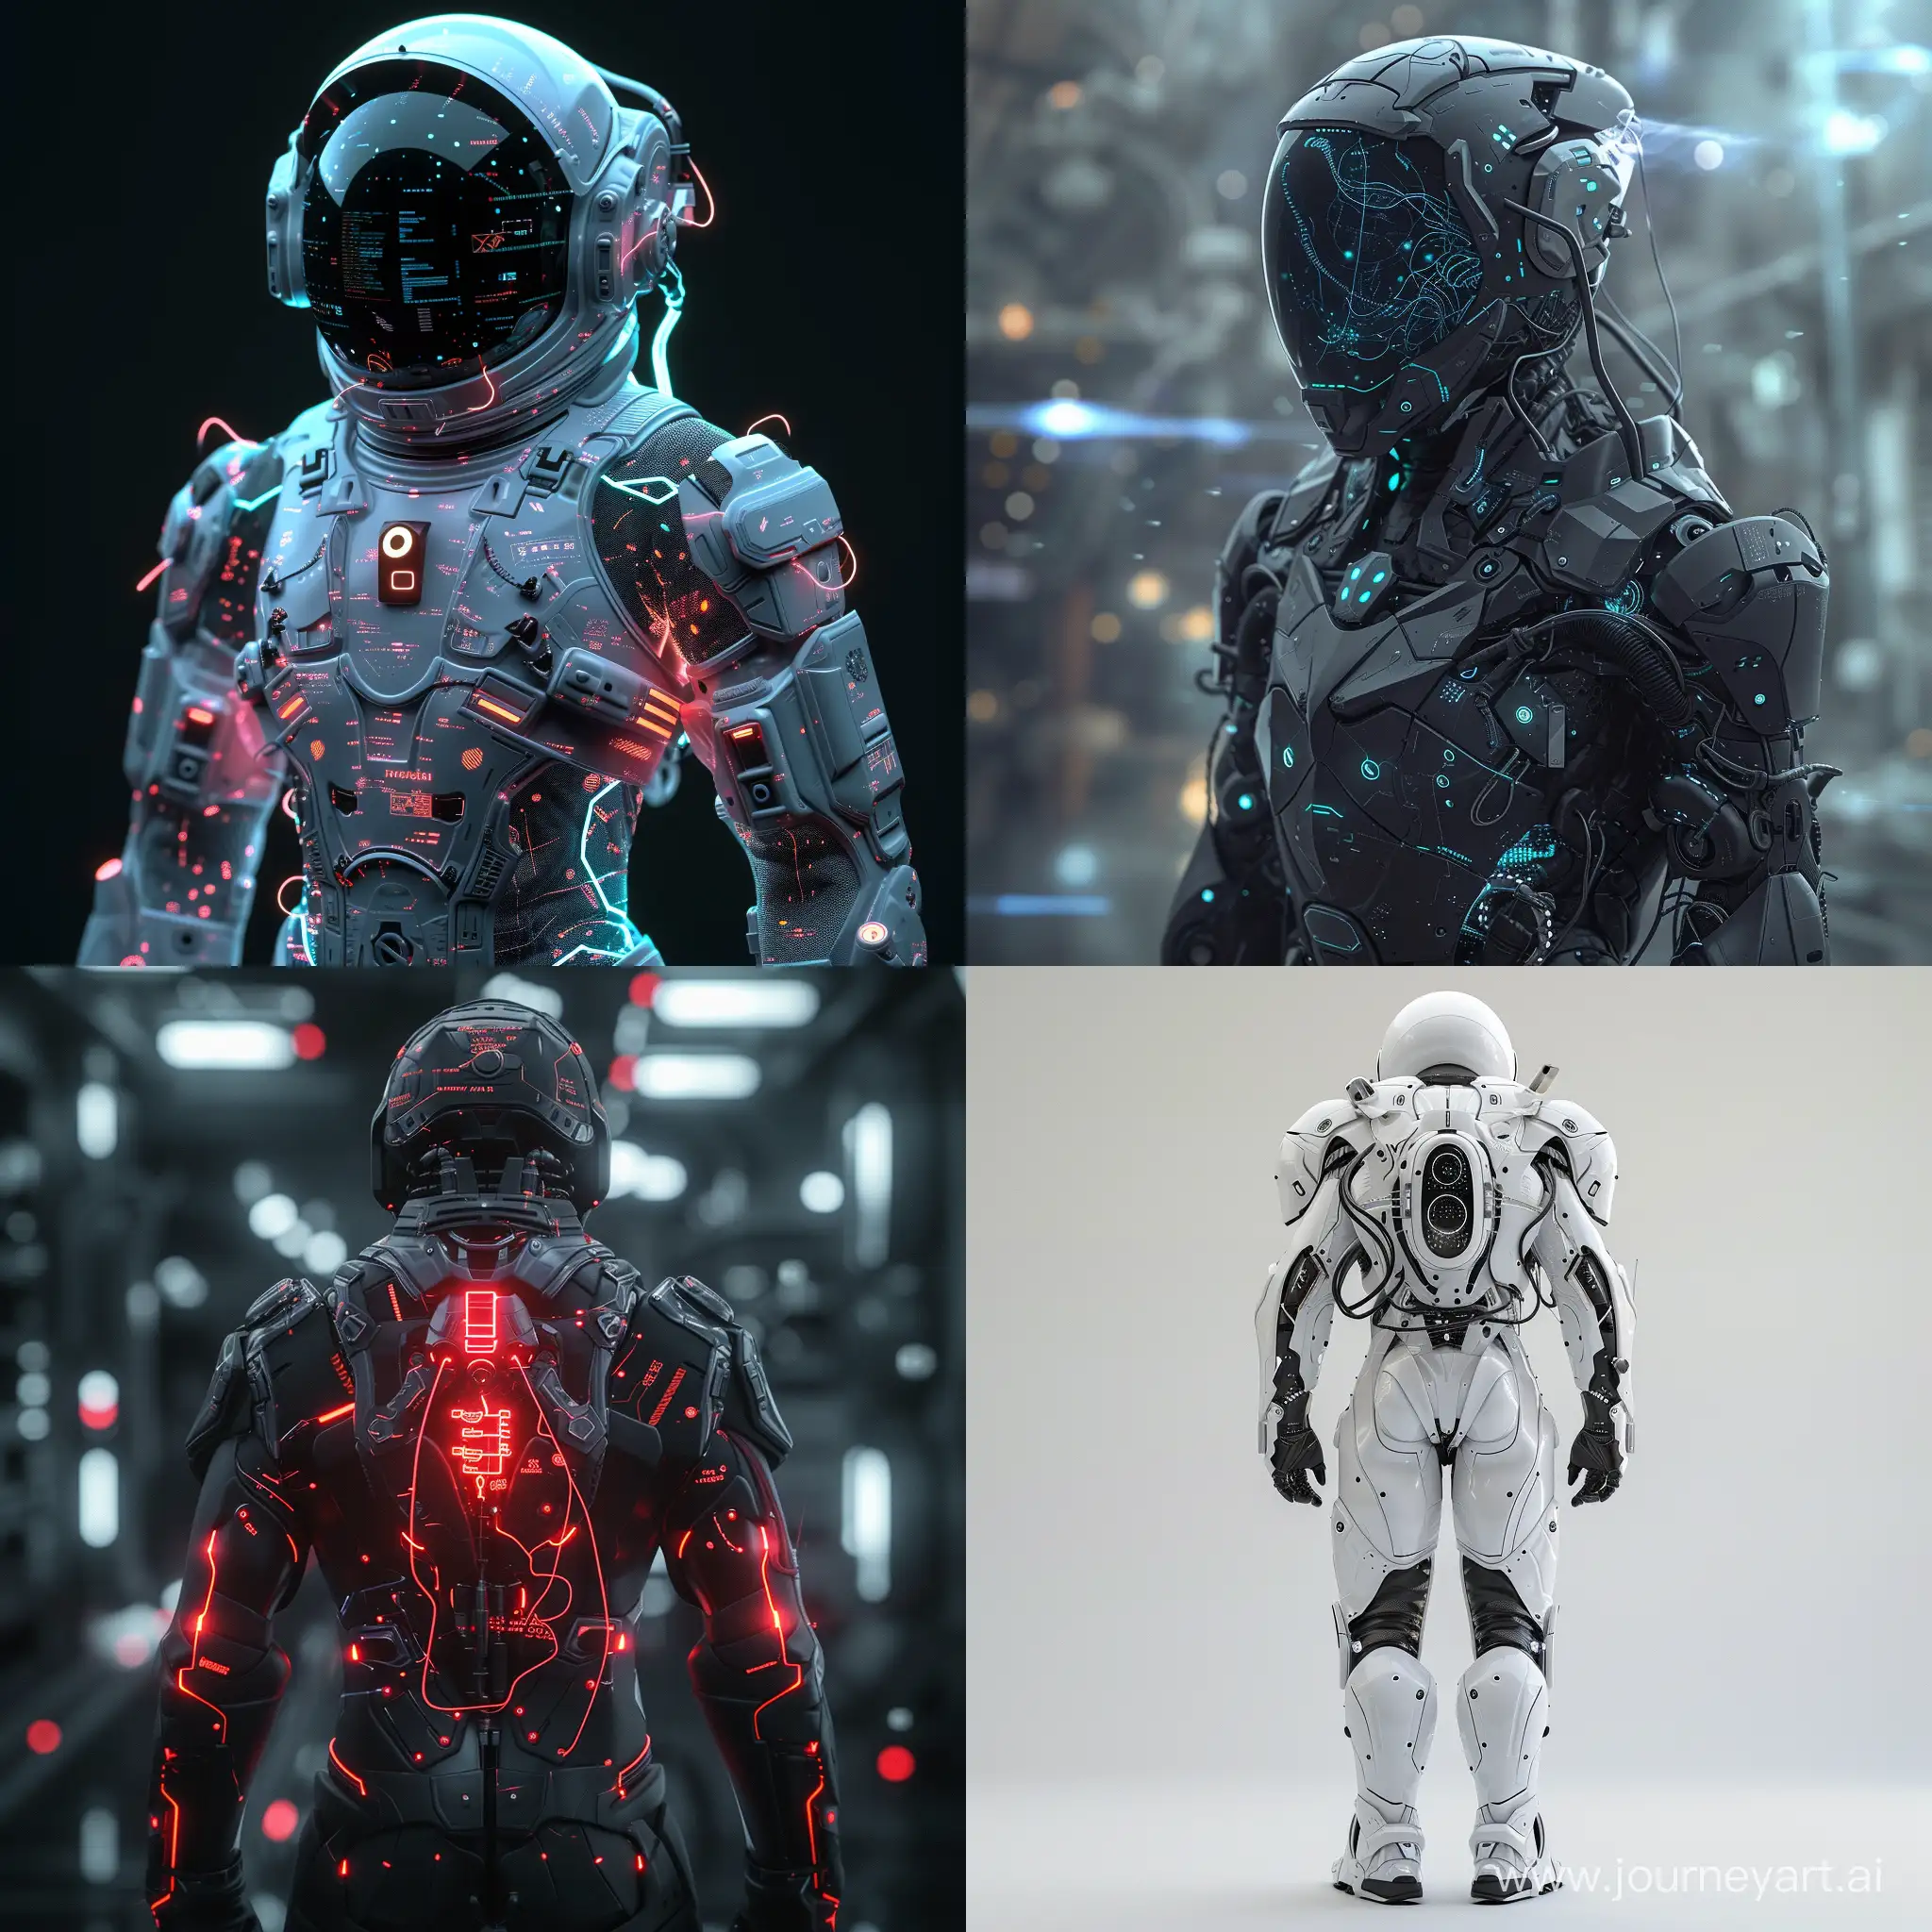 Futuristic cyber space suit